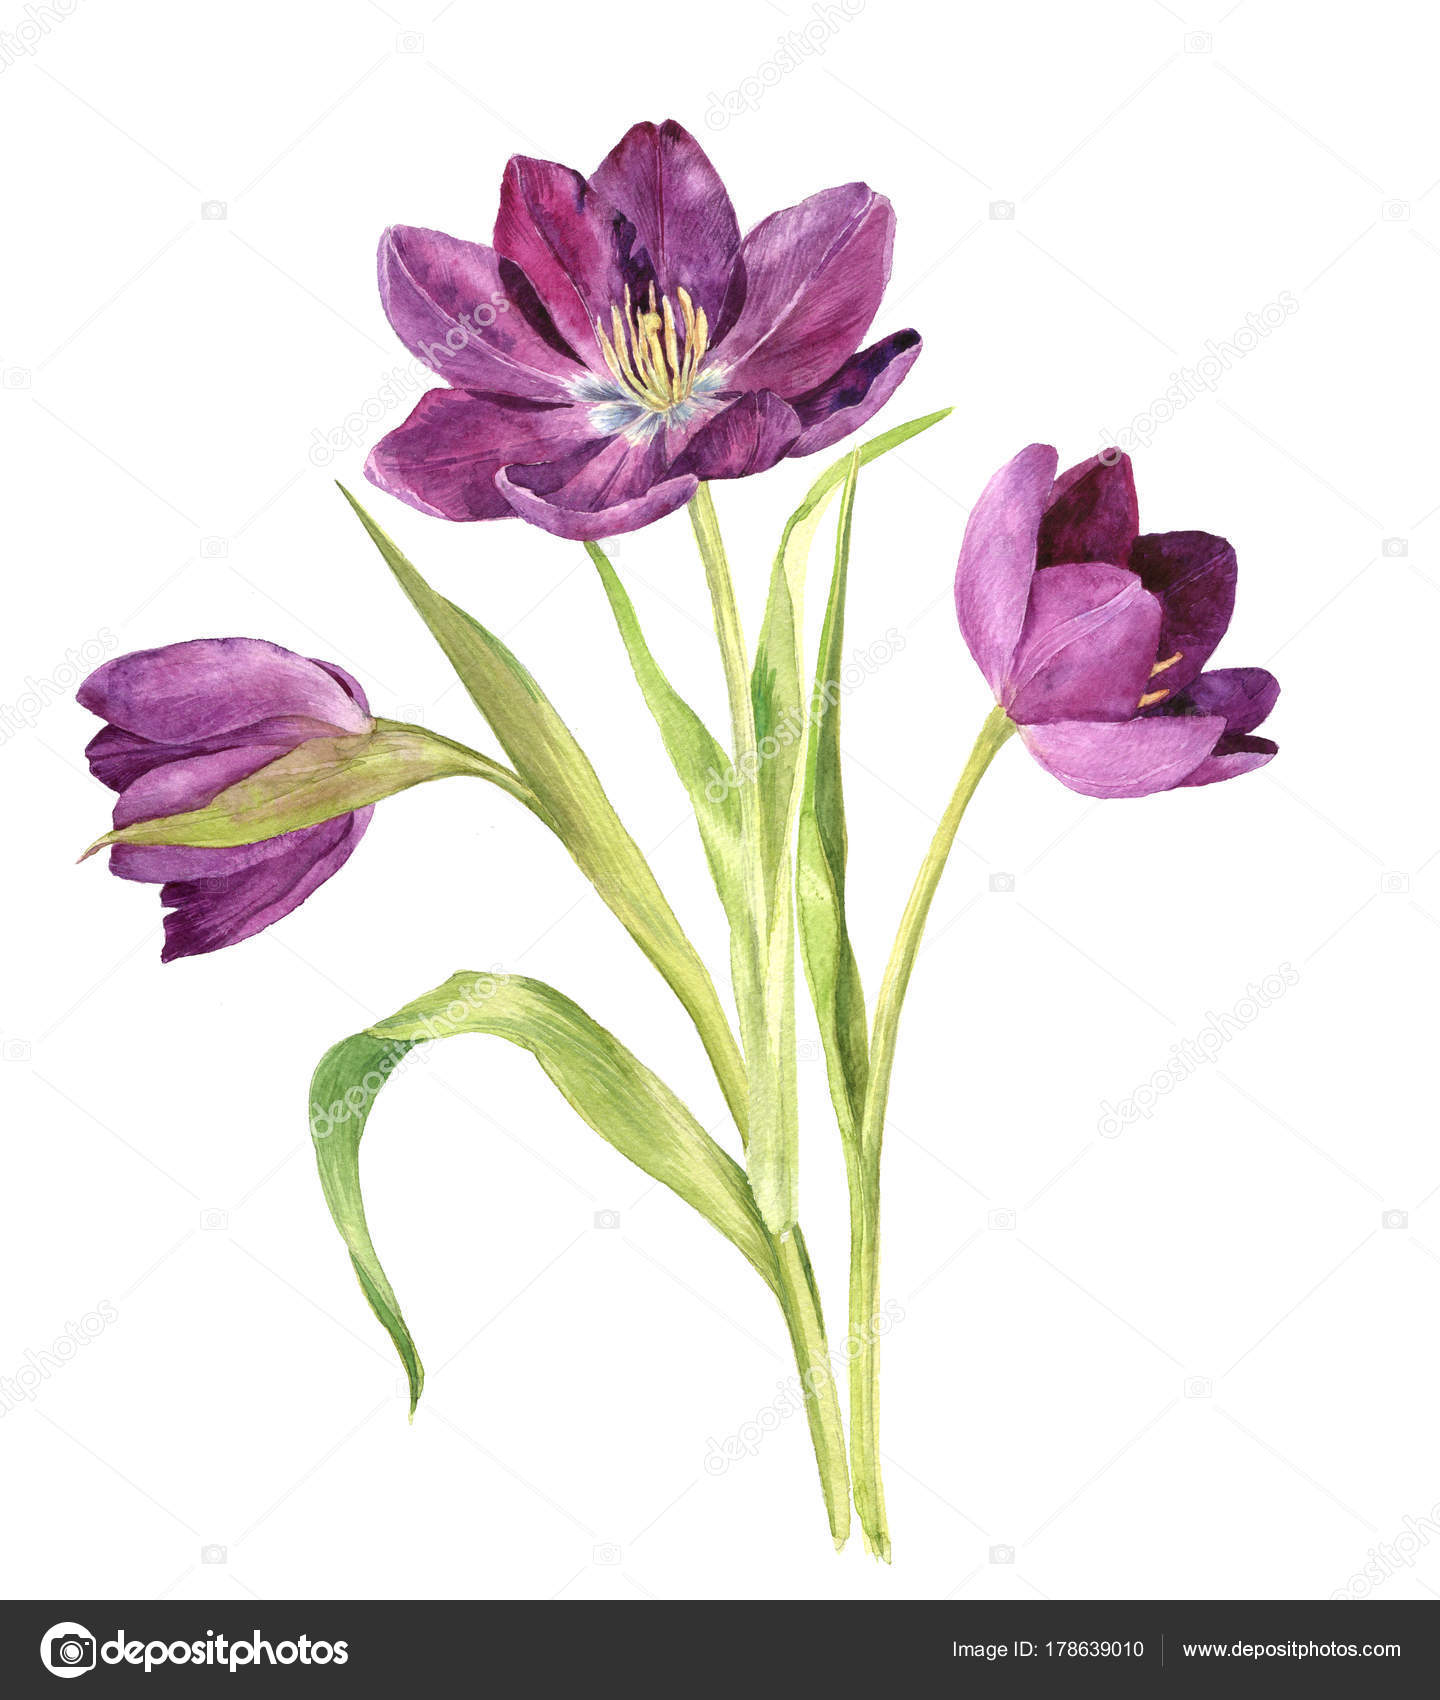 watercolor purple tulips — Stock Photo © cat_arch_angel #178639010